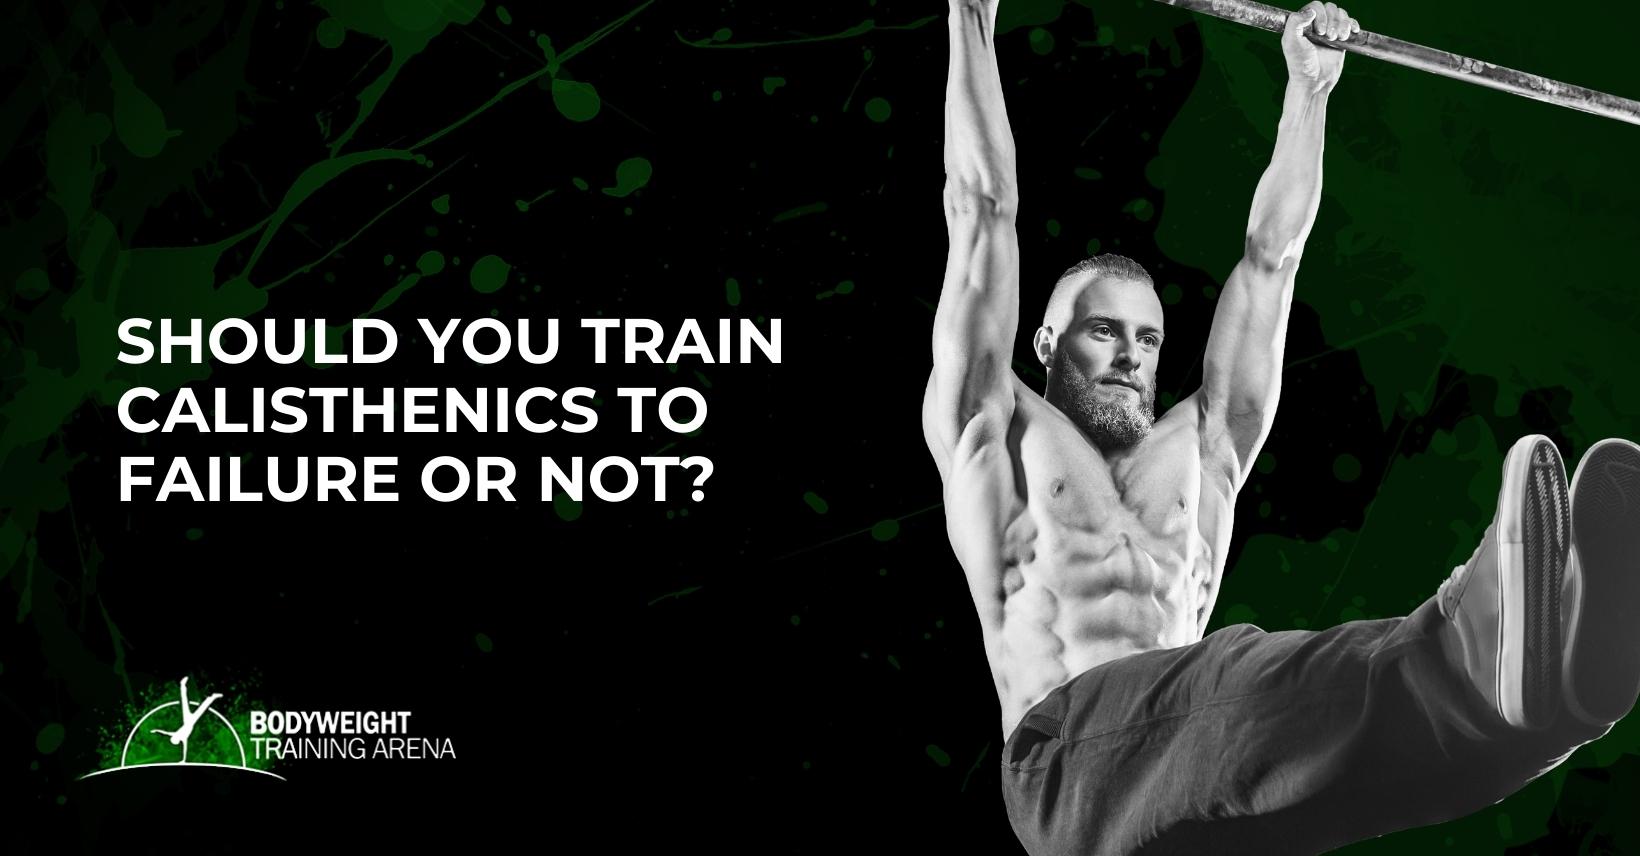 Should you train calisthenics to failure or not?